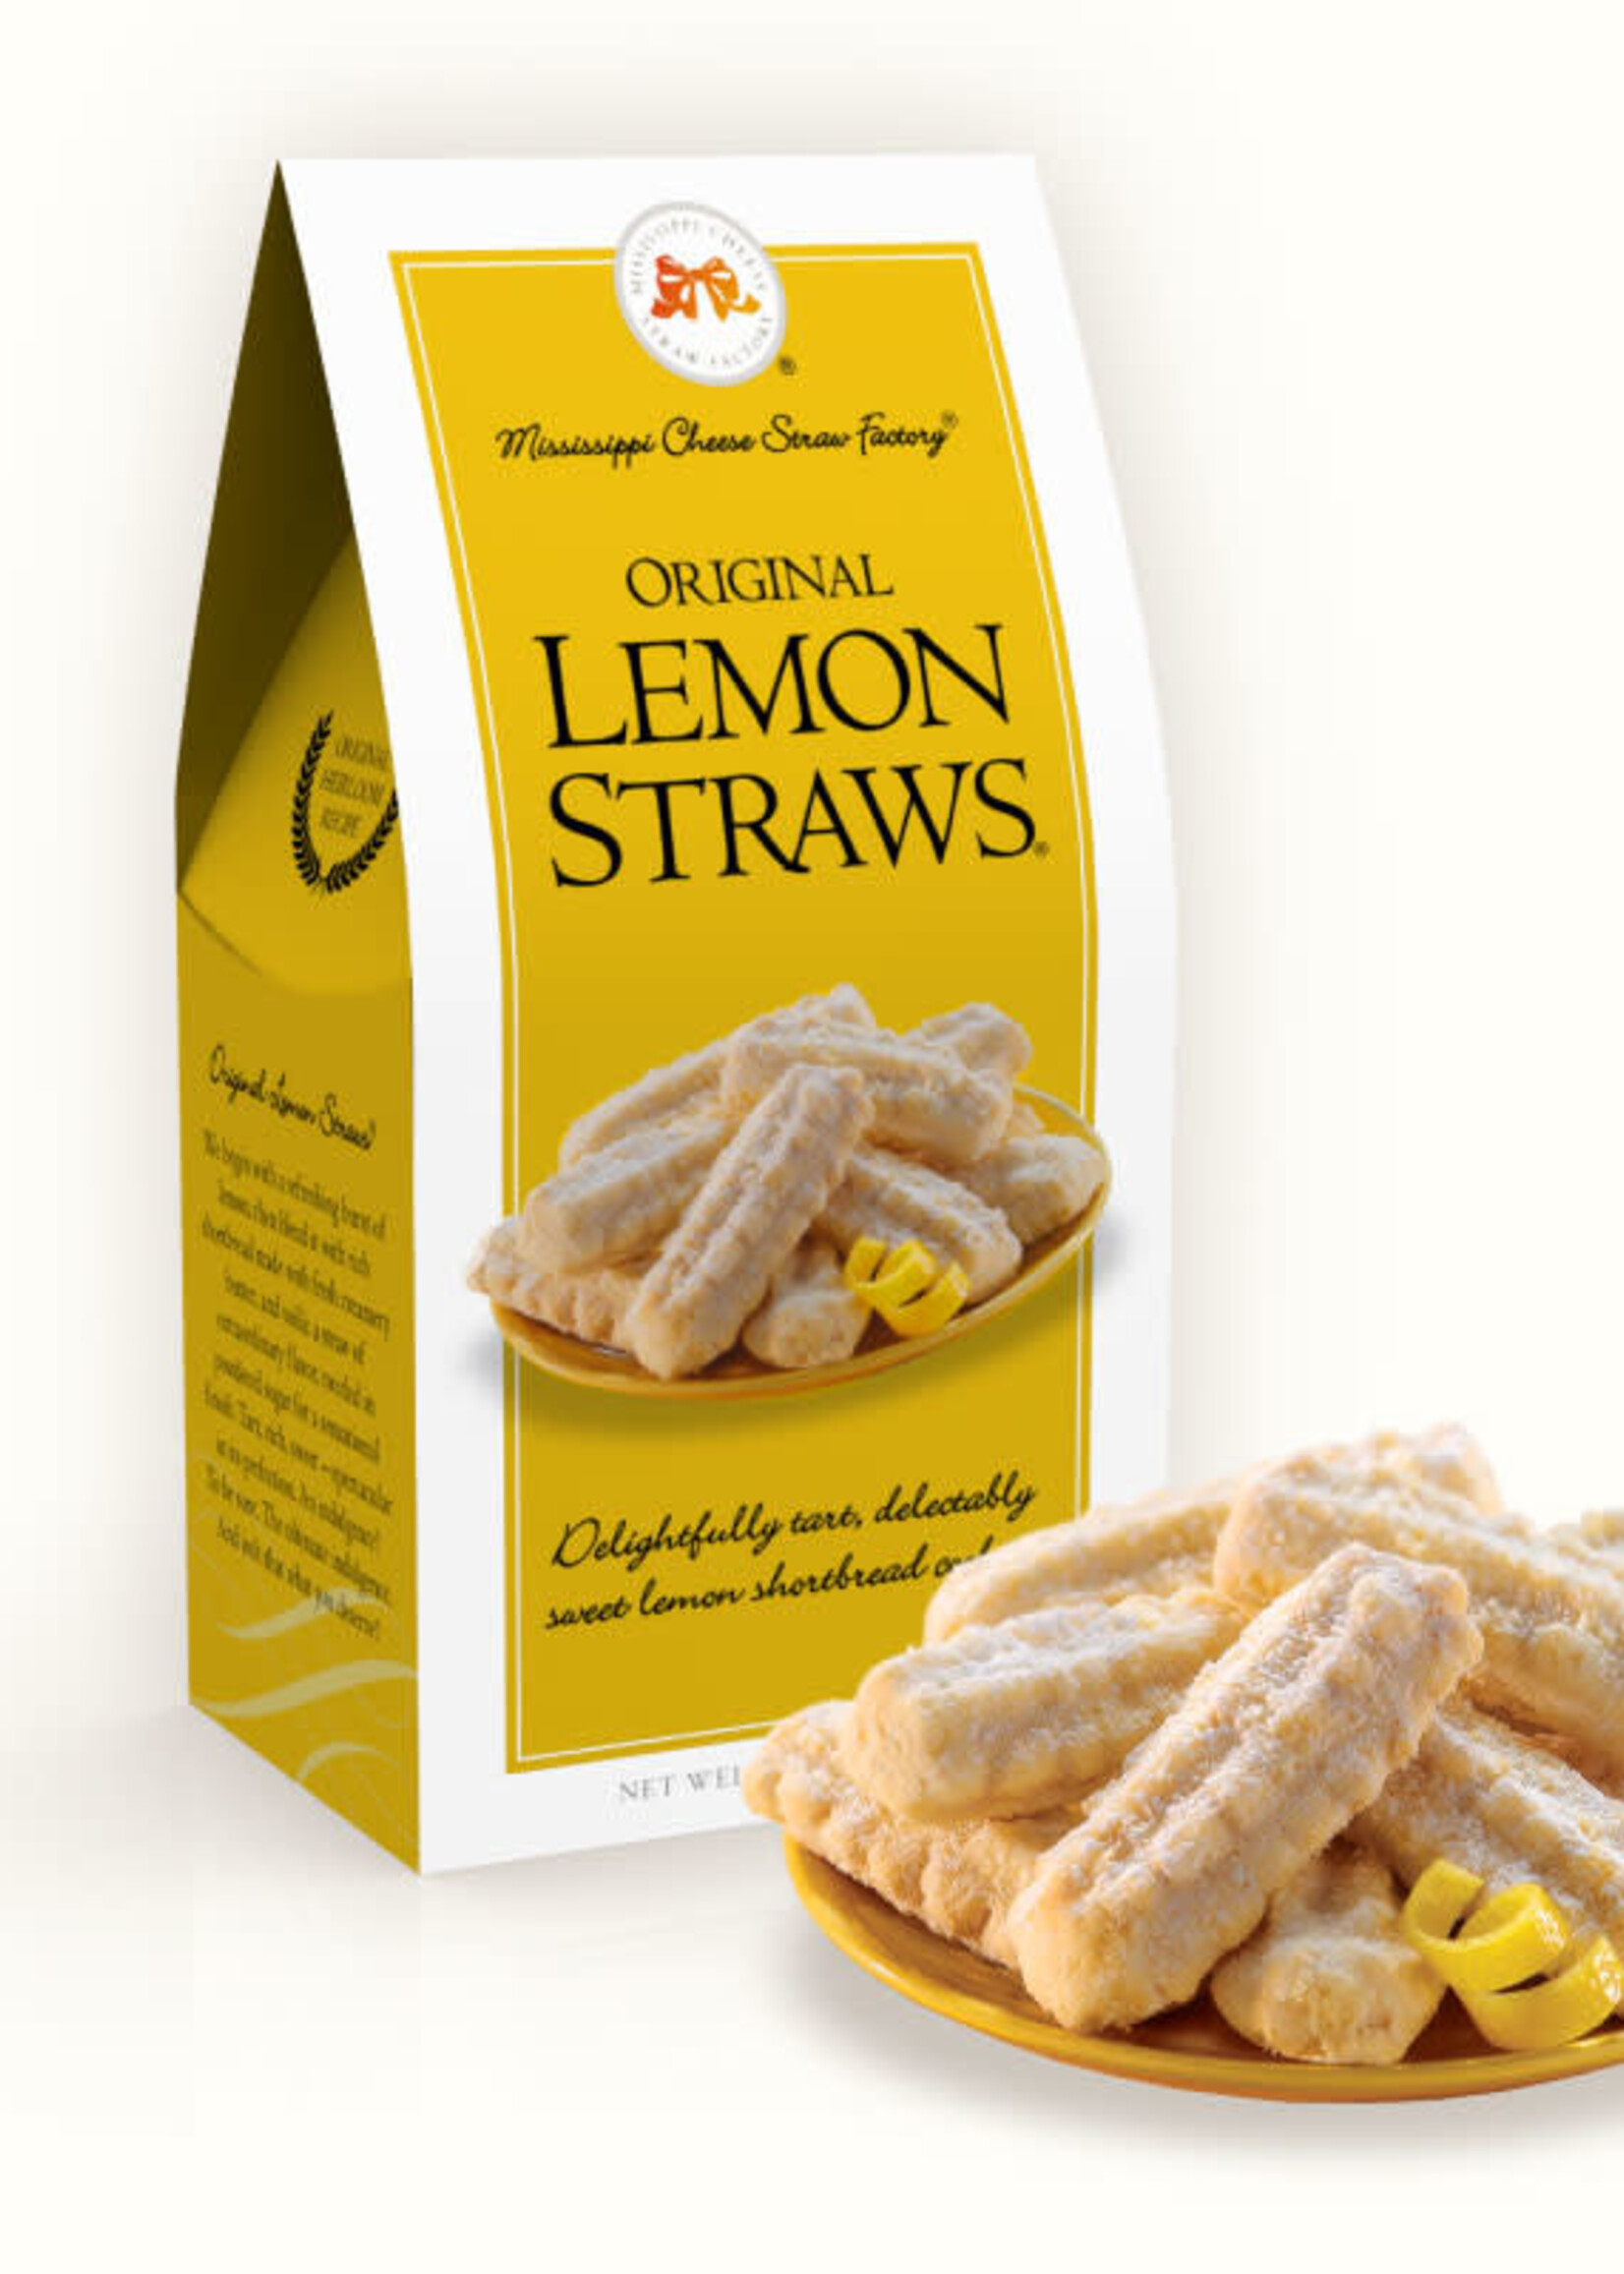 Mississippi Cheese Straws Lemon Straws Lemon 3.5 oz.